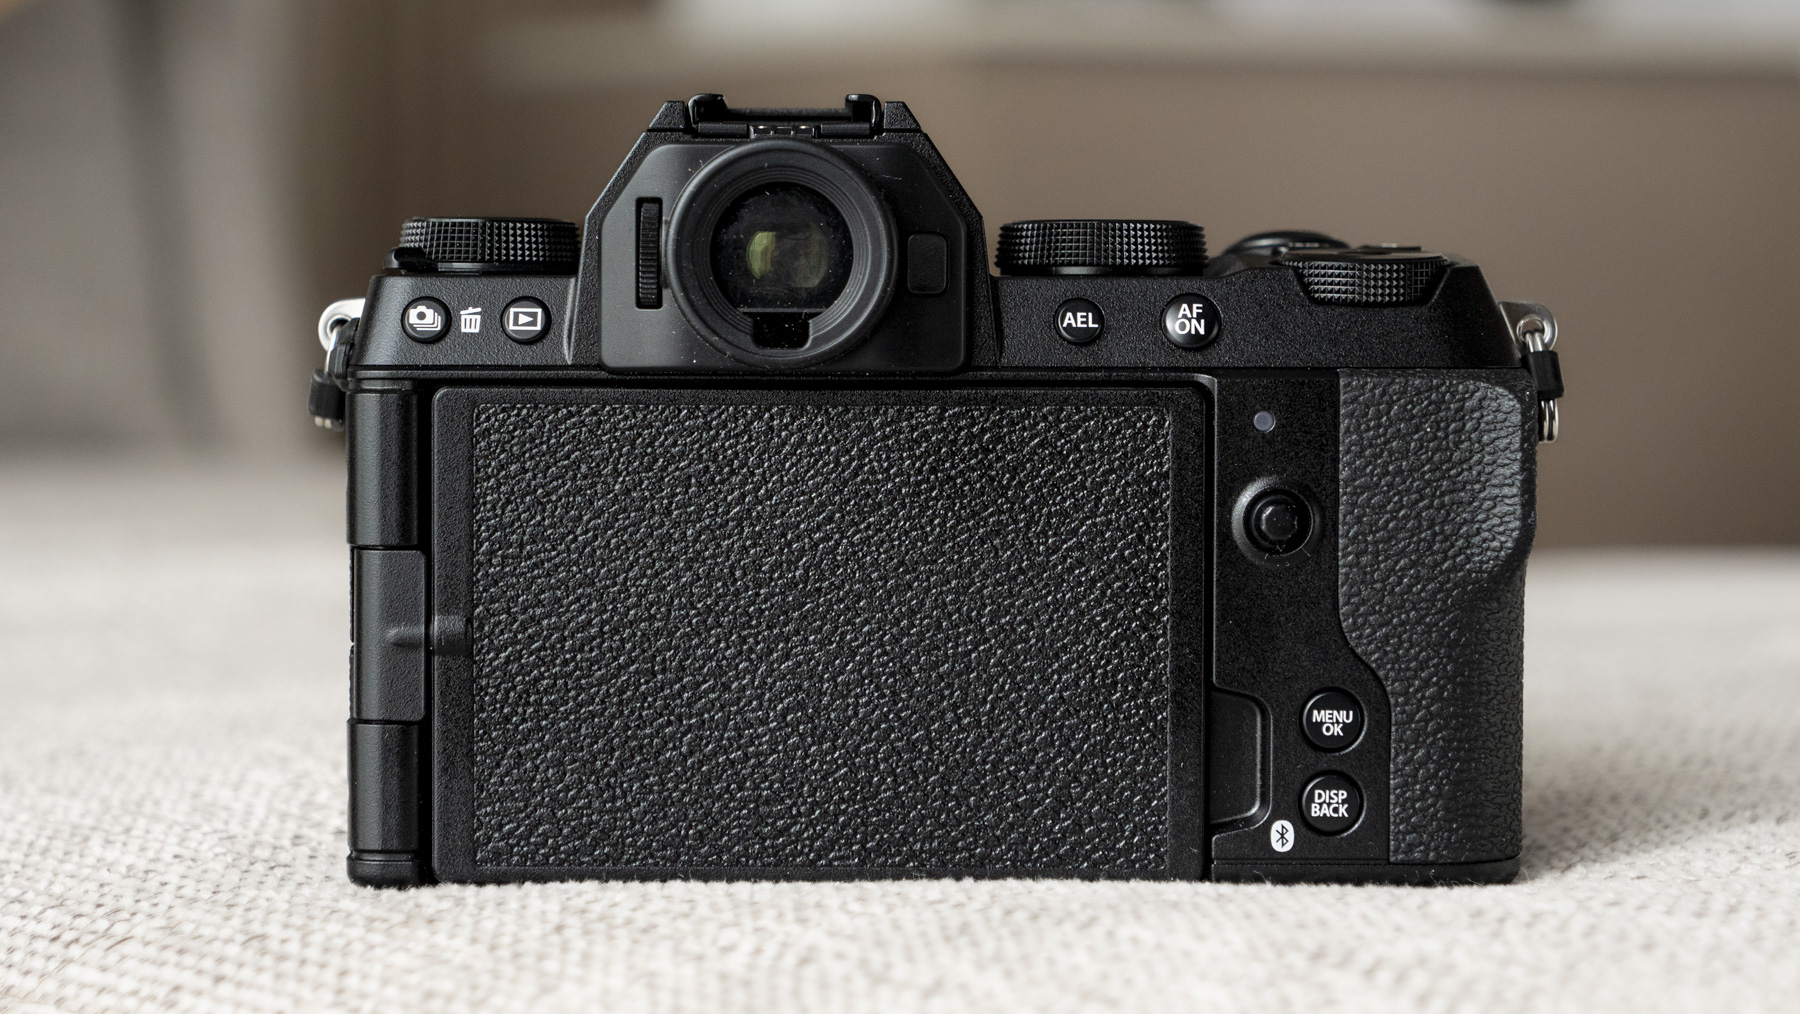 Fujifilm X-S20 camera back with screen folded away